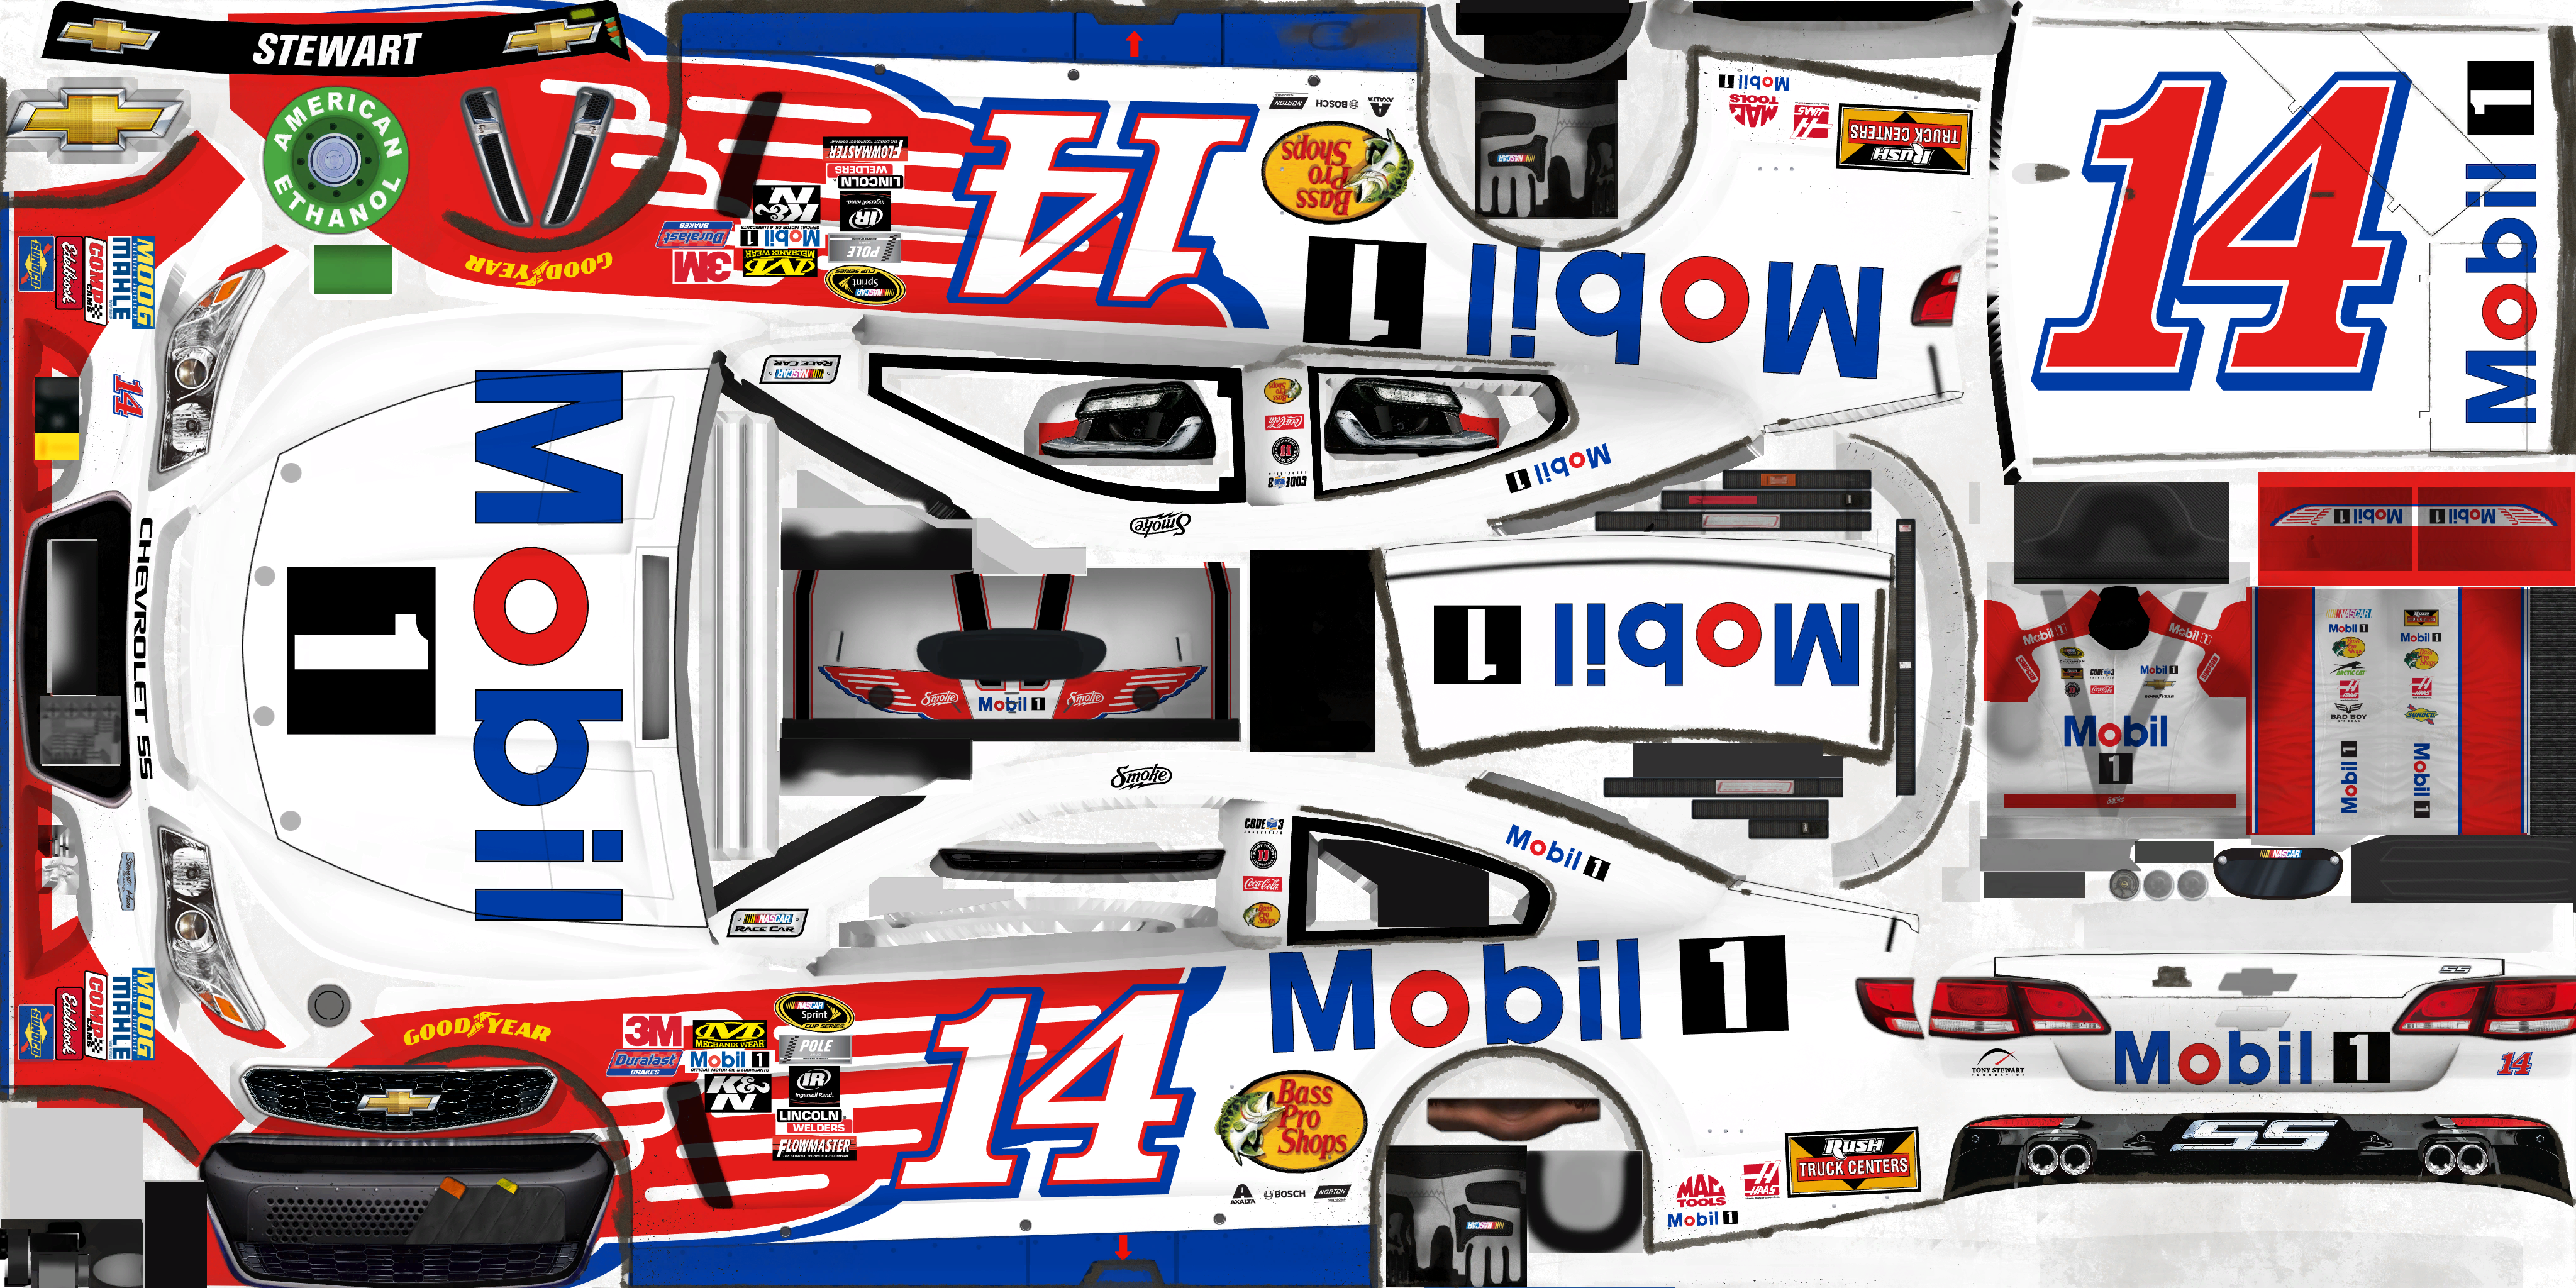 NASCAR Heat Evolution - #14 Tony Stewart